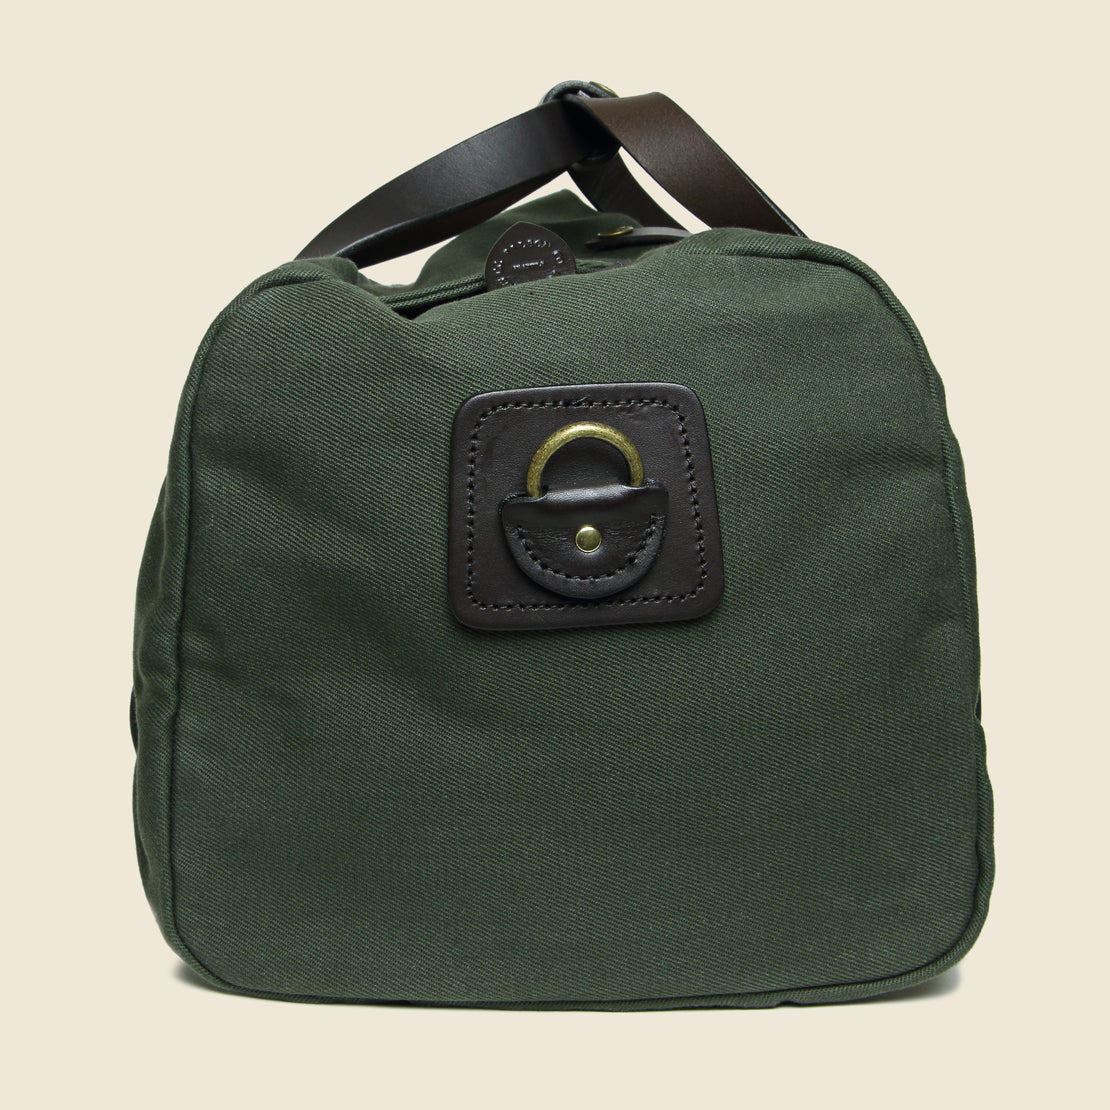 Small Duffle Bag - Otter Green